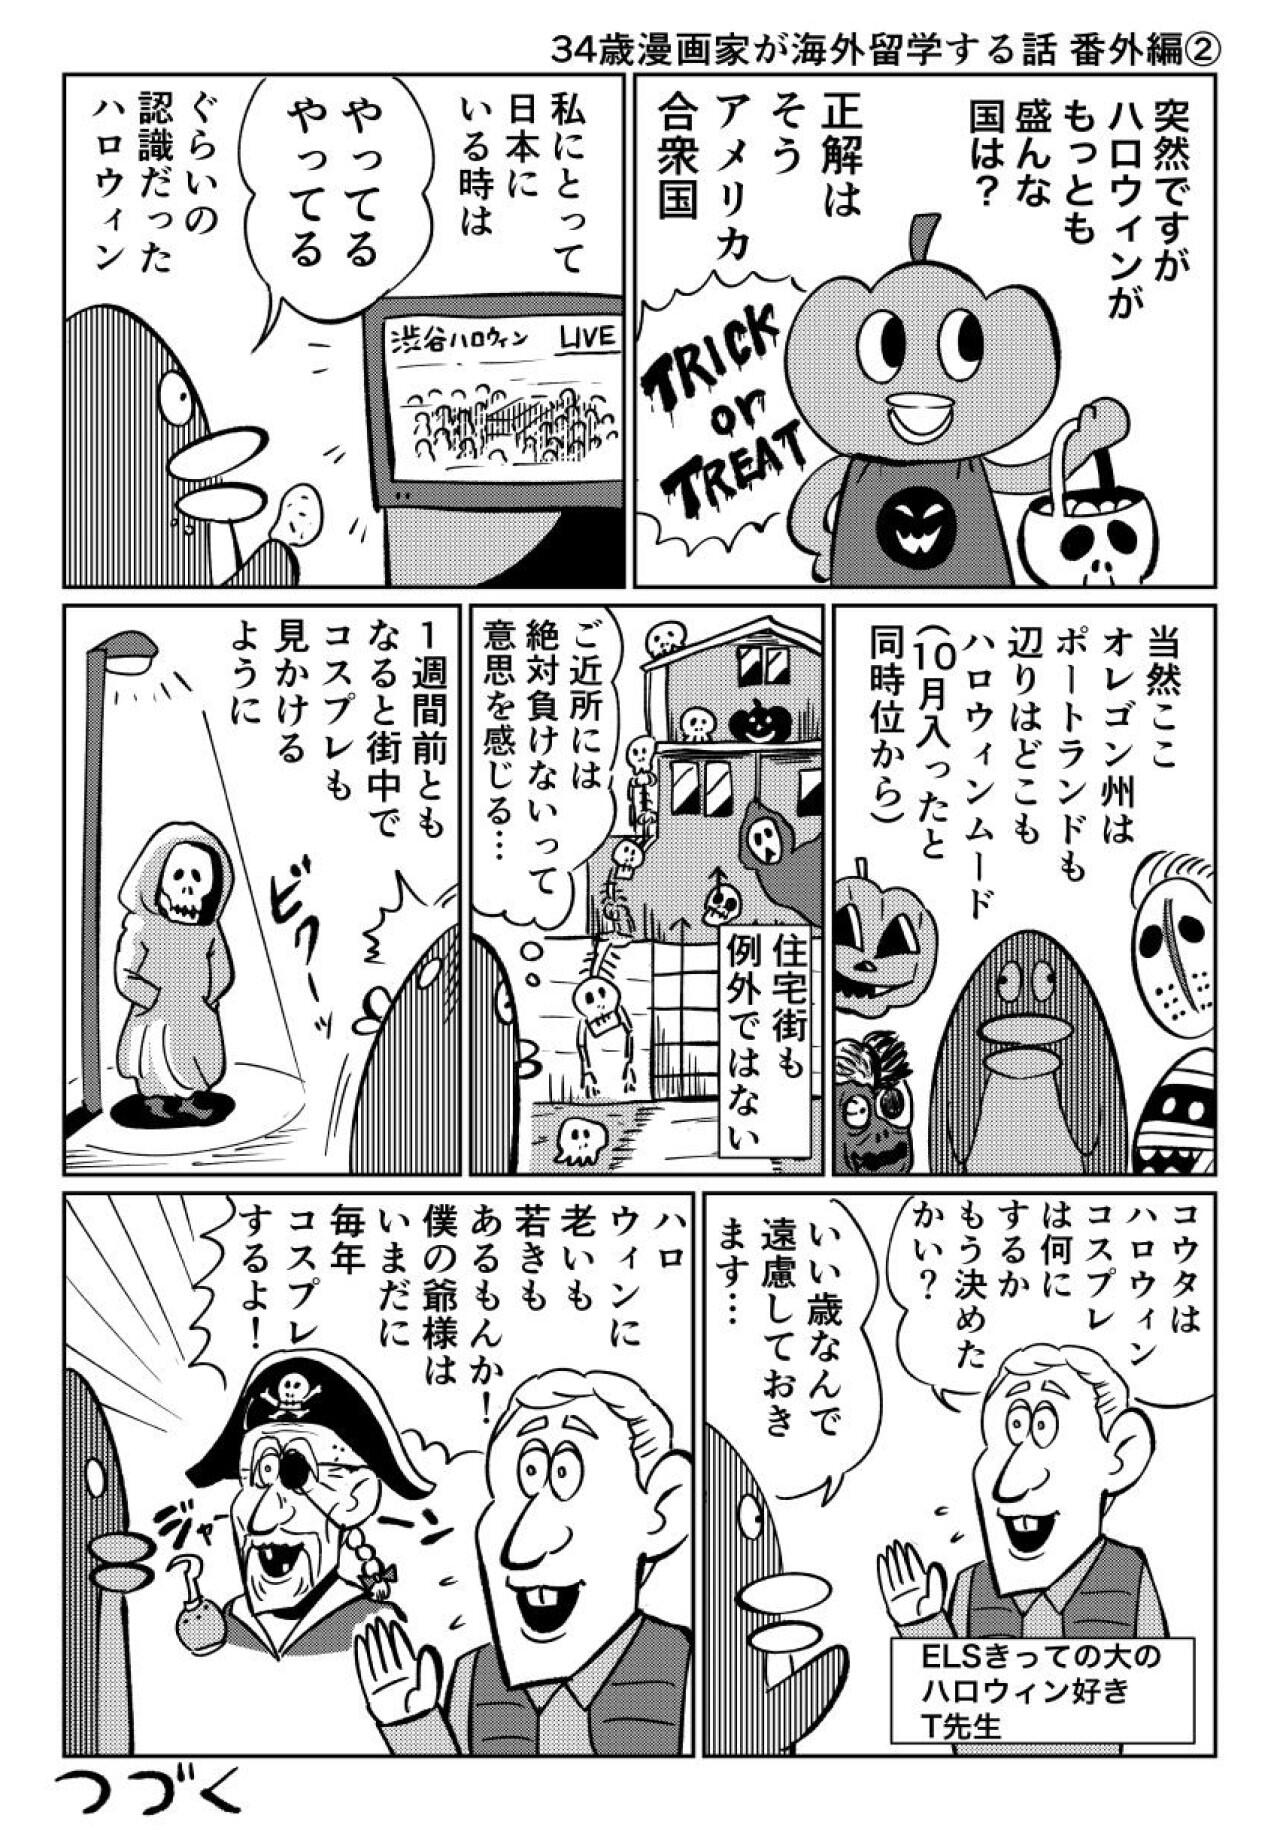 https://www.ryugaku.co.jp/column/images/34sai_ex2_1280.jpg